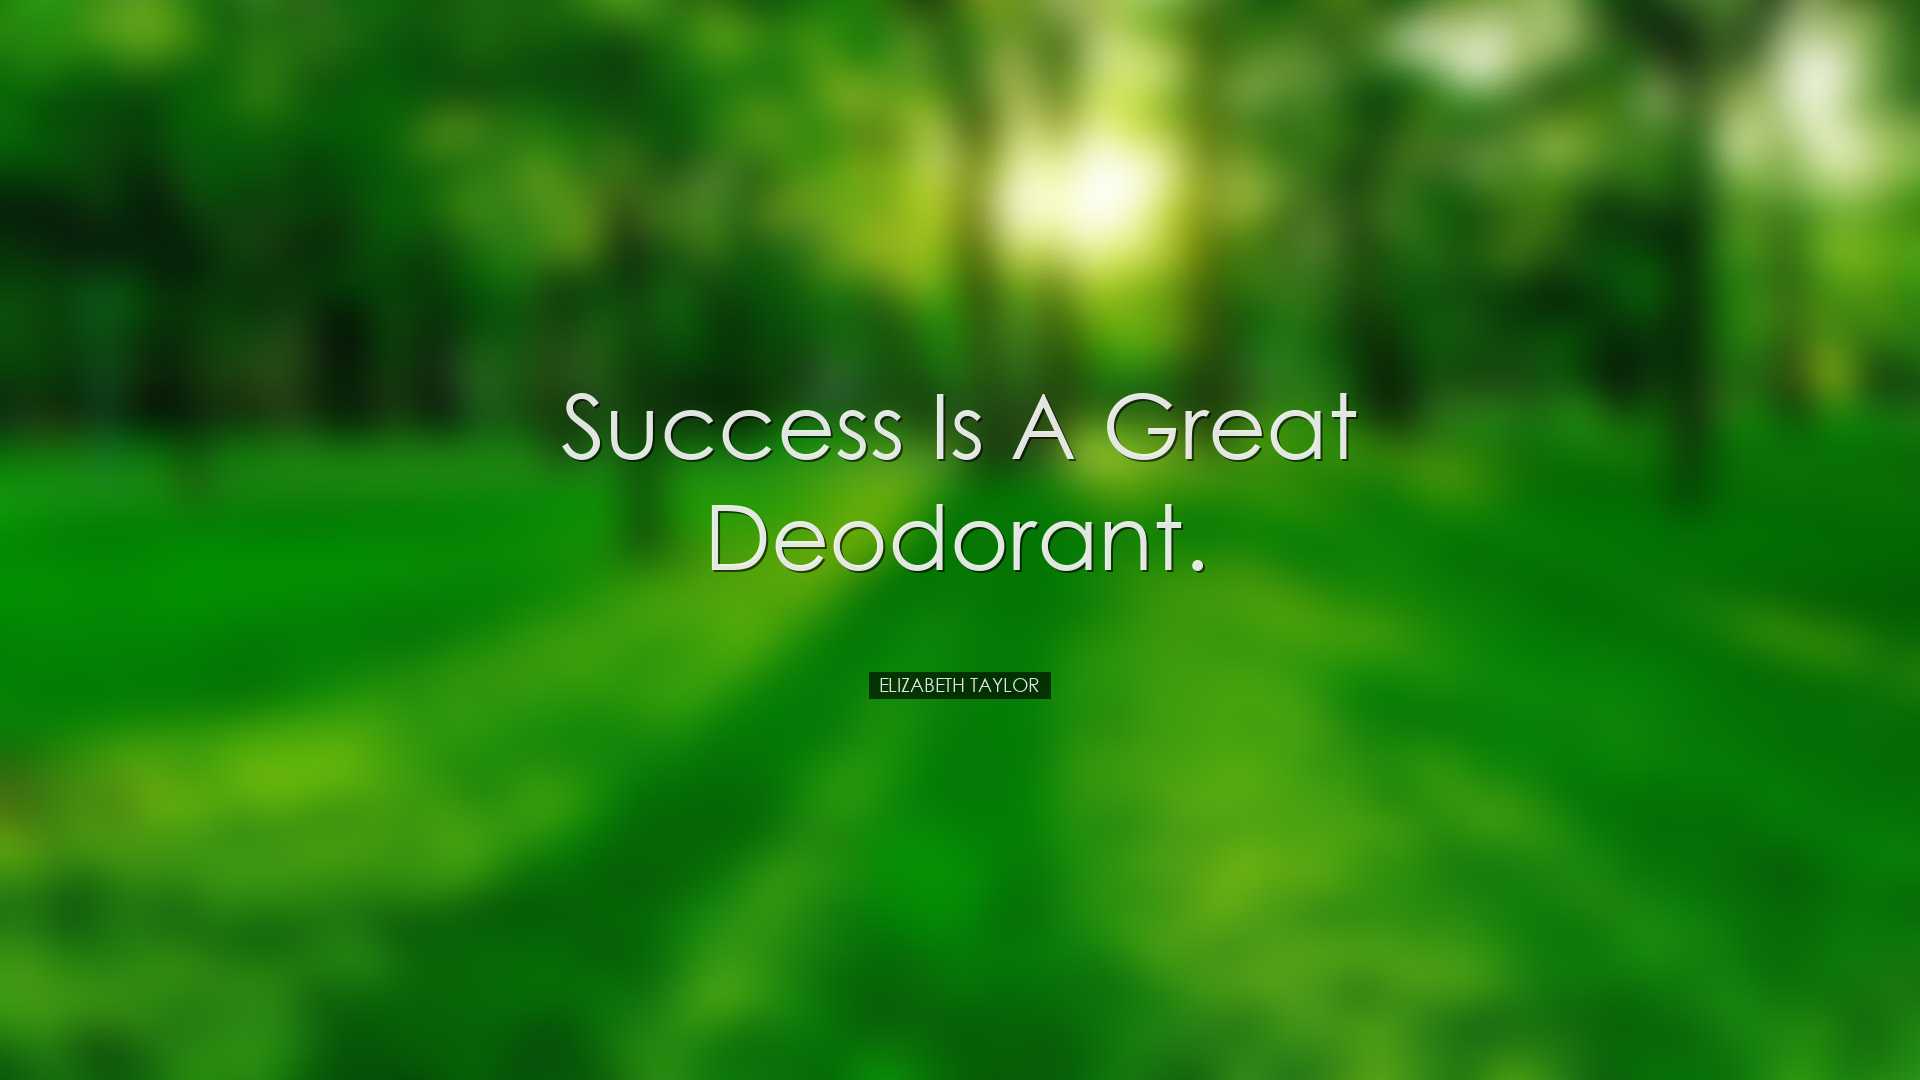 Success is a great deodorant. - Elizabeth Taylor